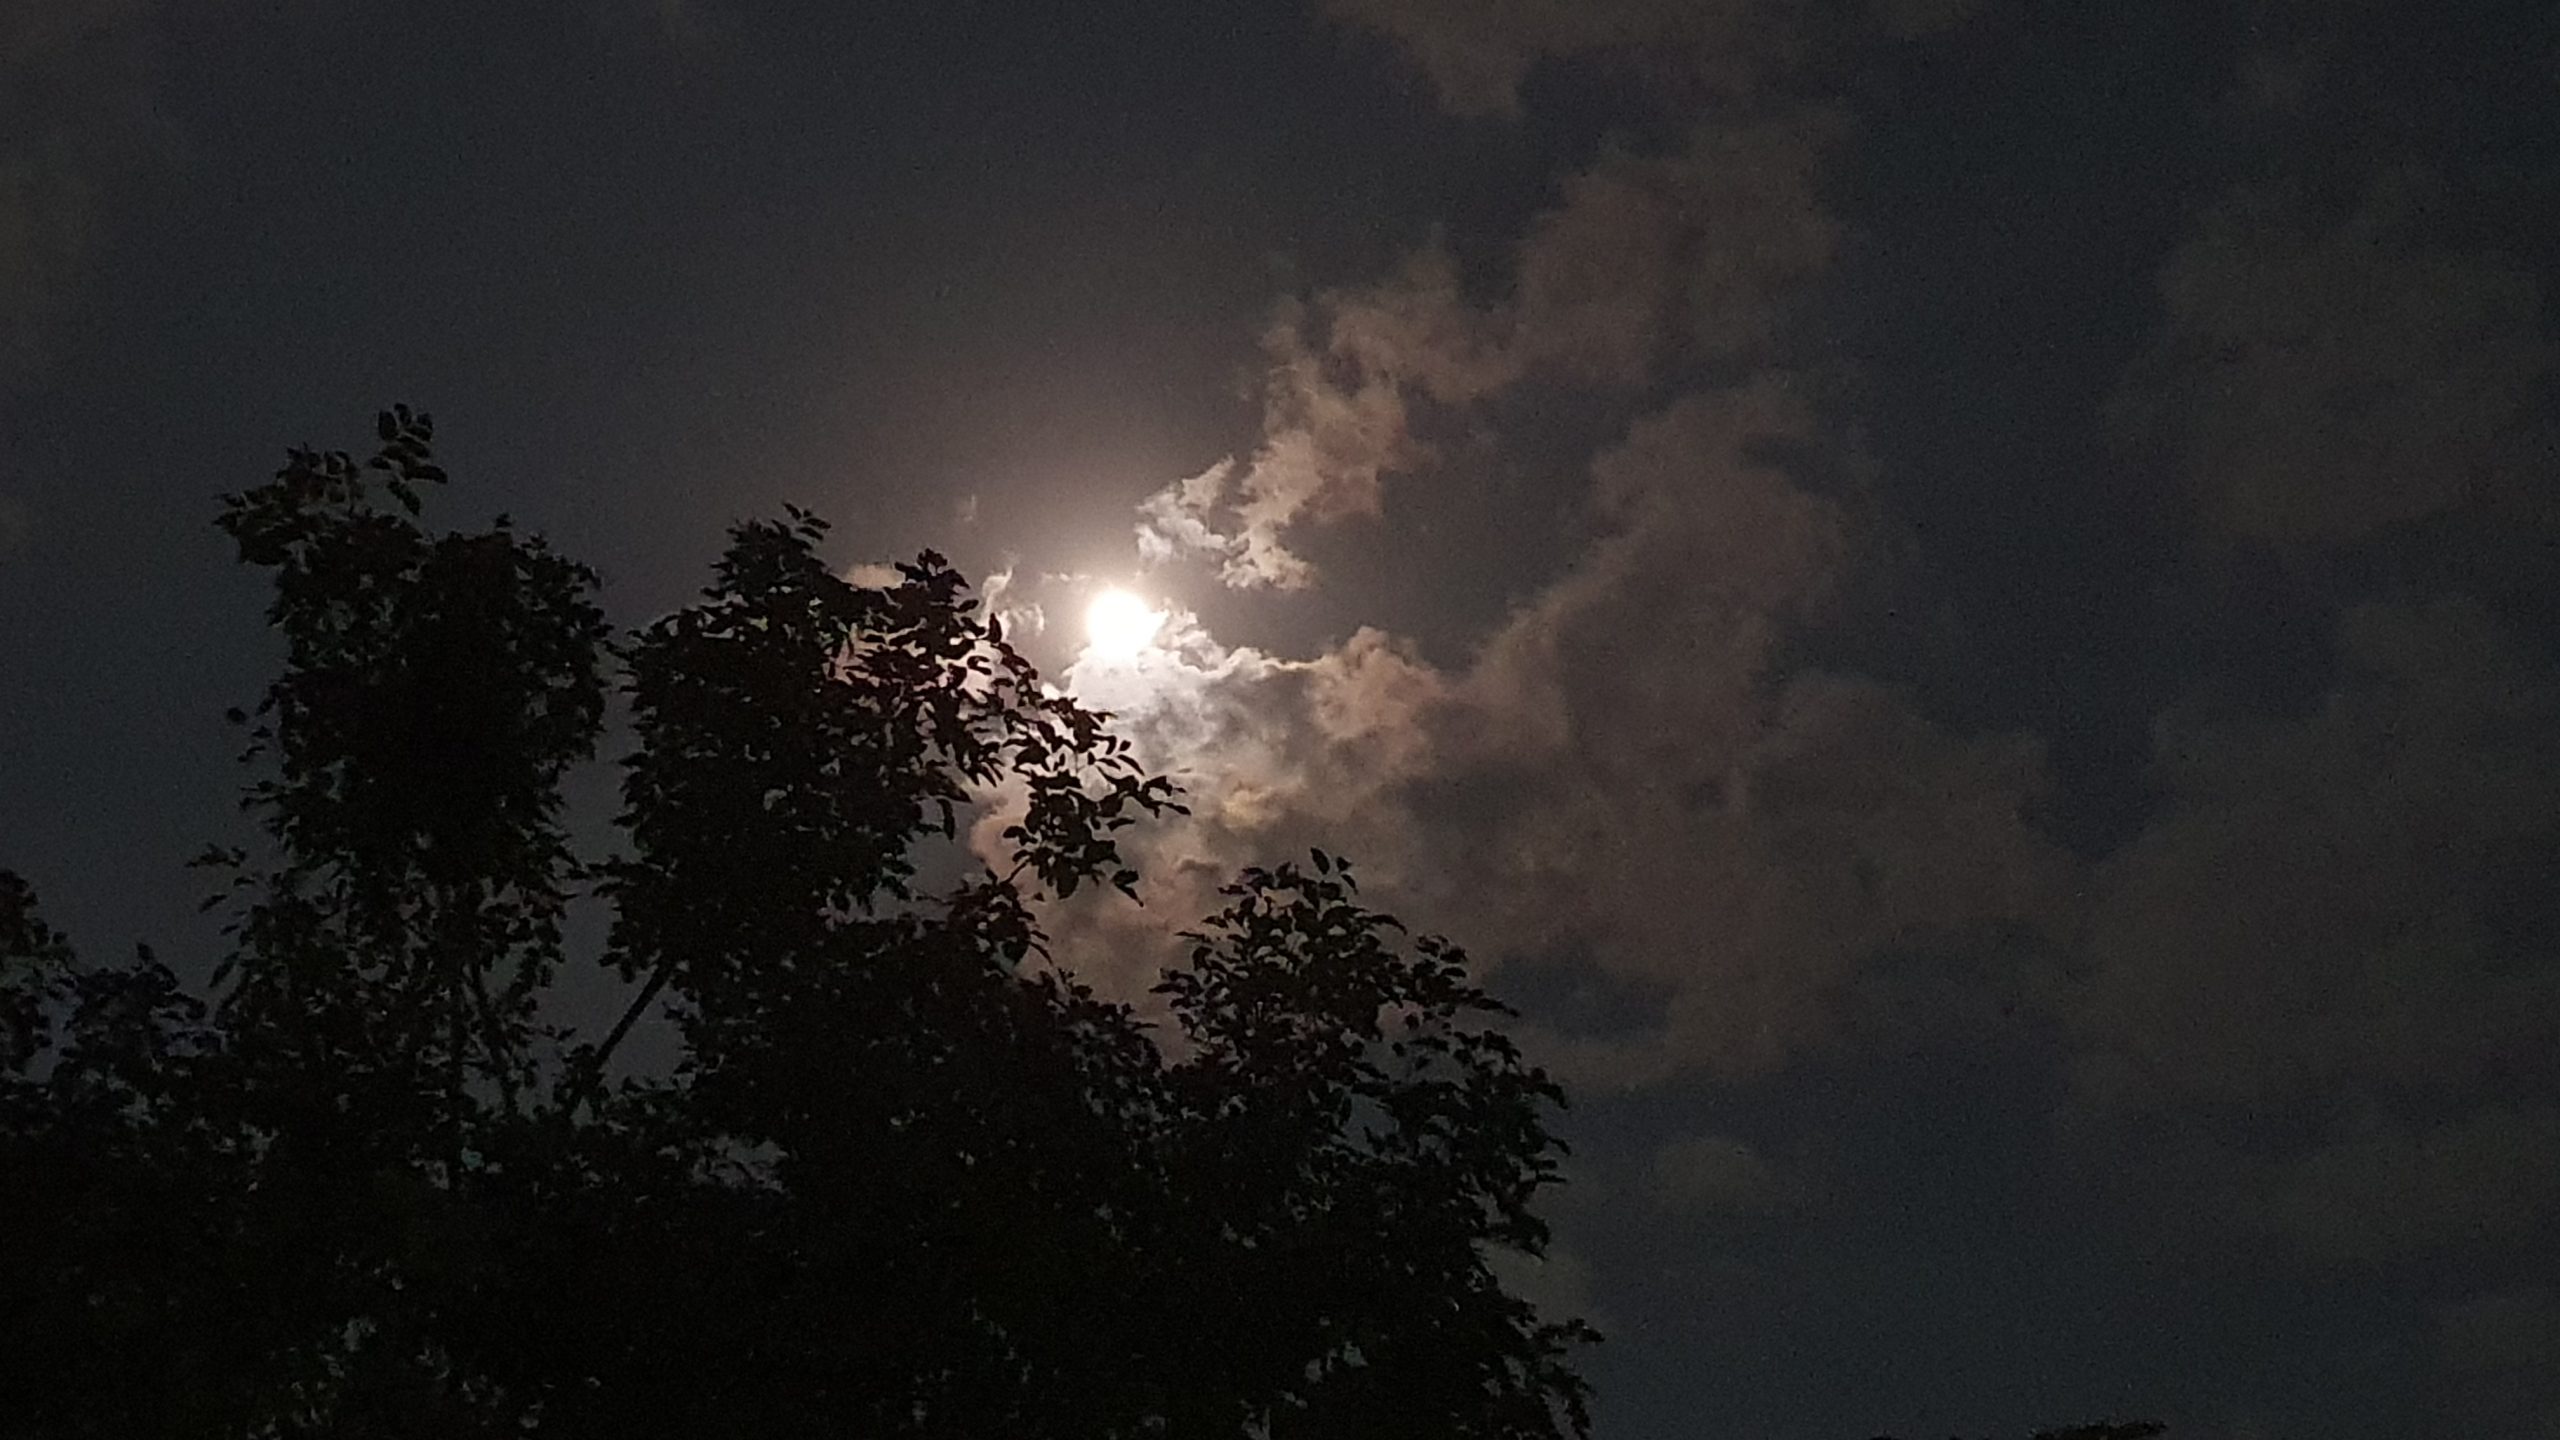 Moonlight Scenery